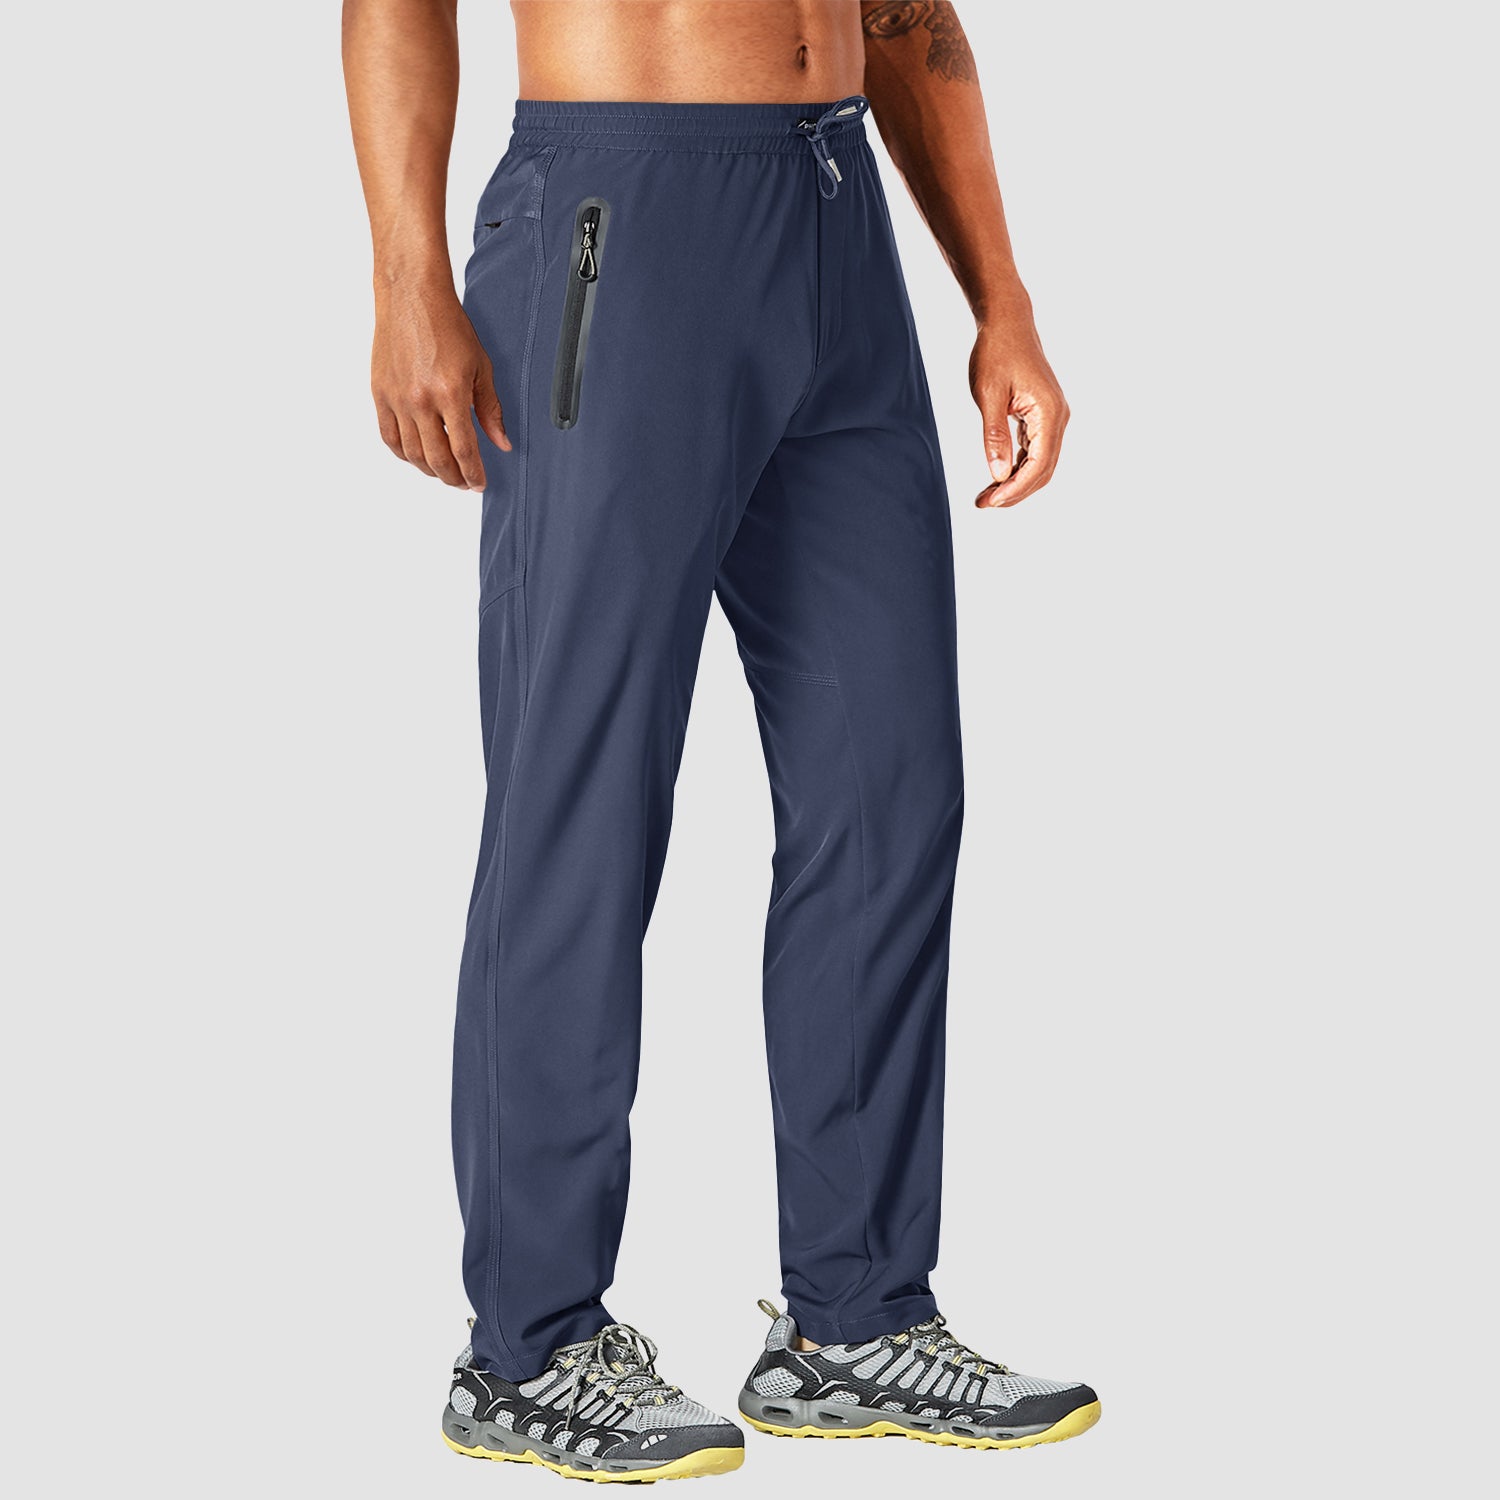 Men Track Summer Lightweight Quick Dry Sweatpants With Zipper Pockets